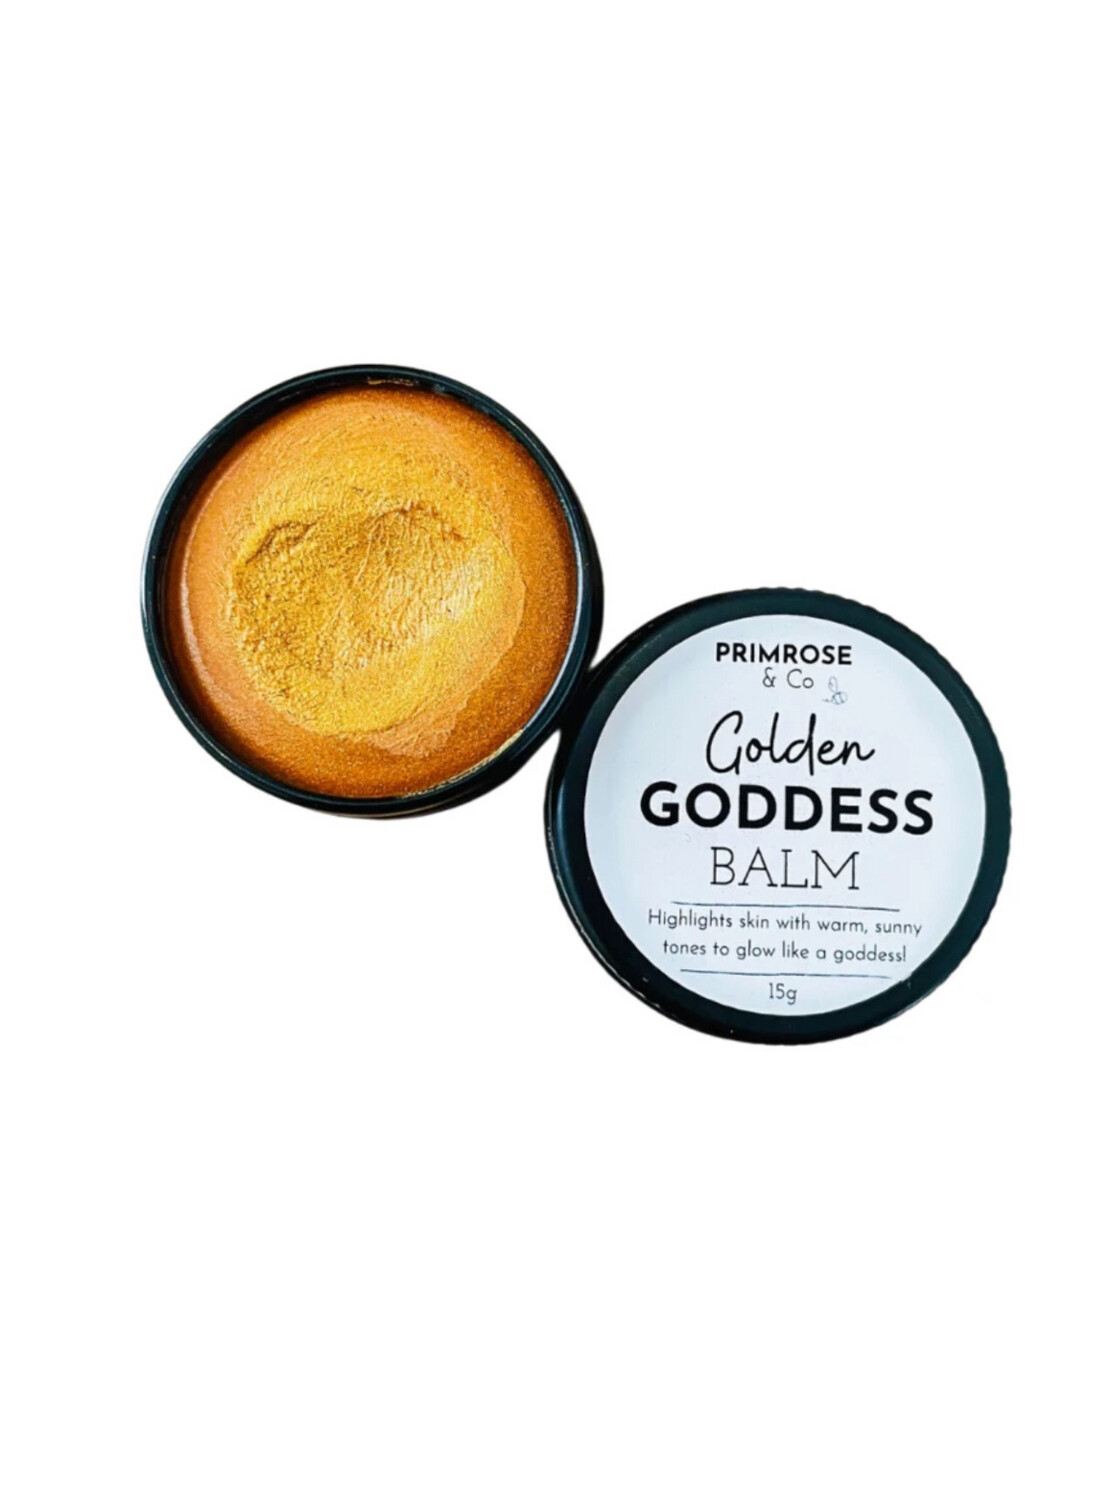 Golden Goddess Balm by Primrose